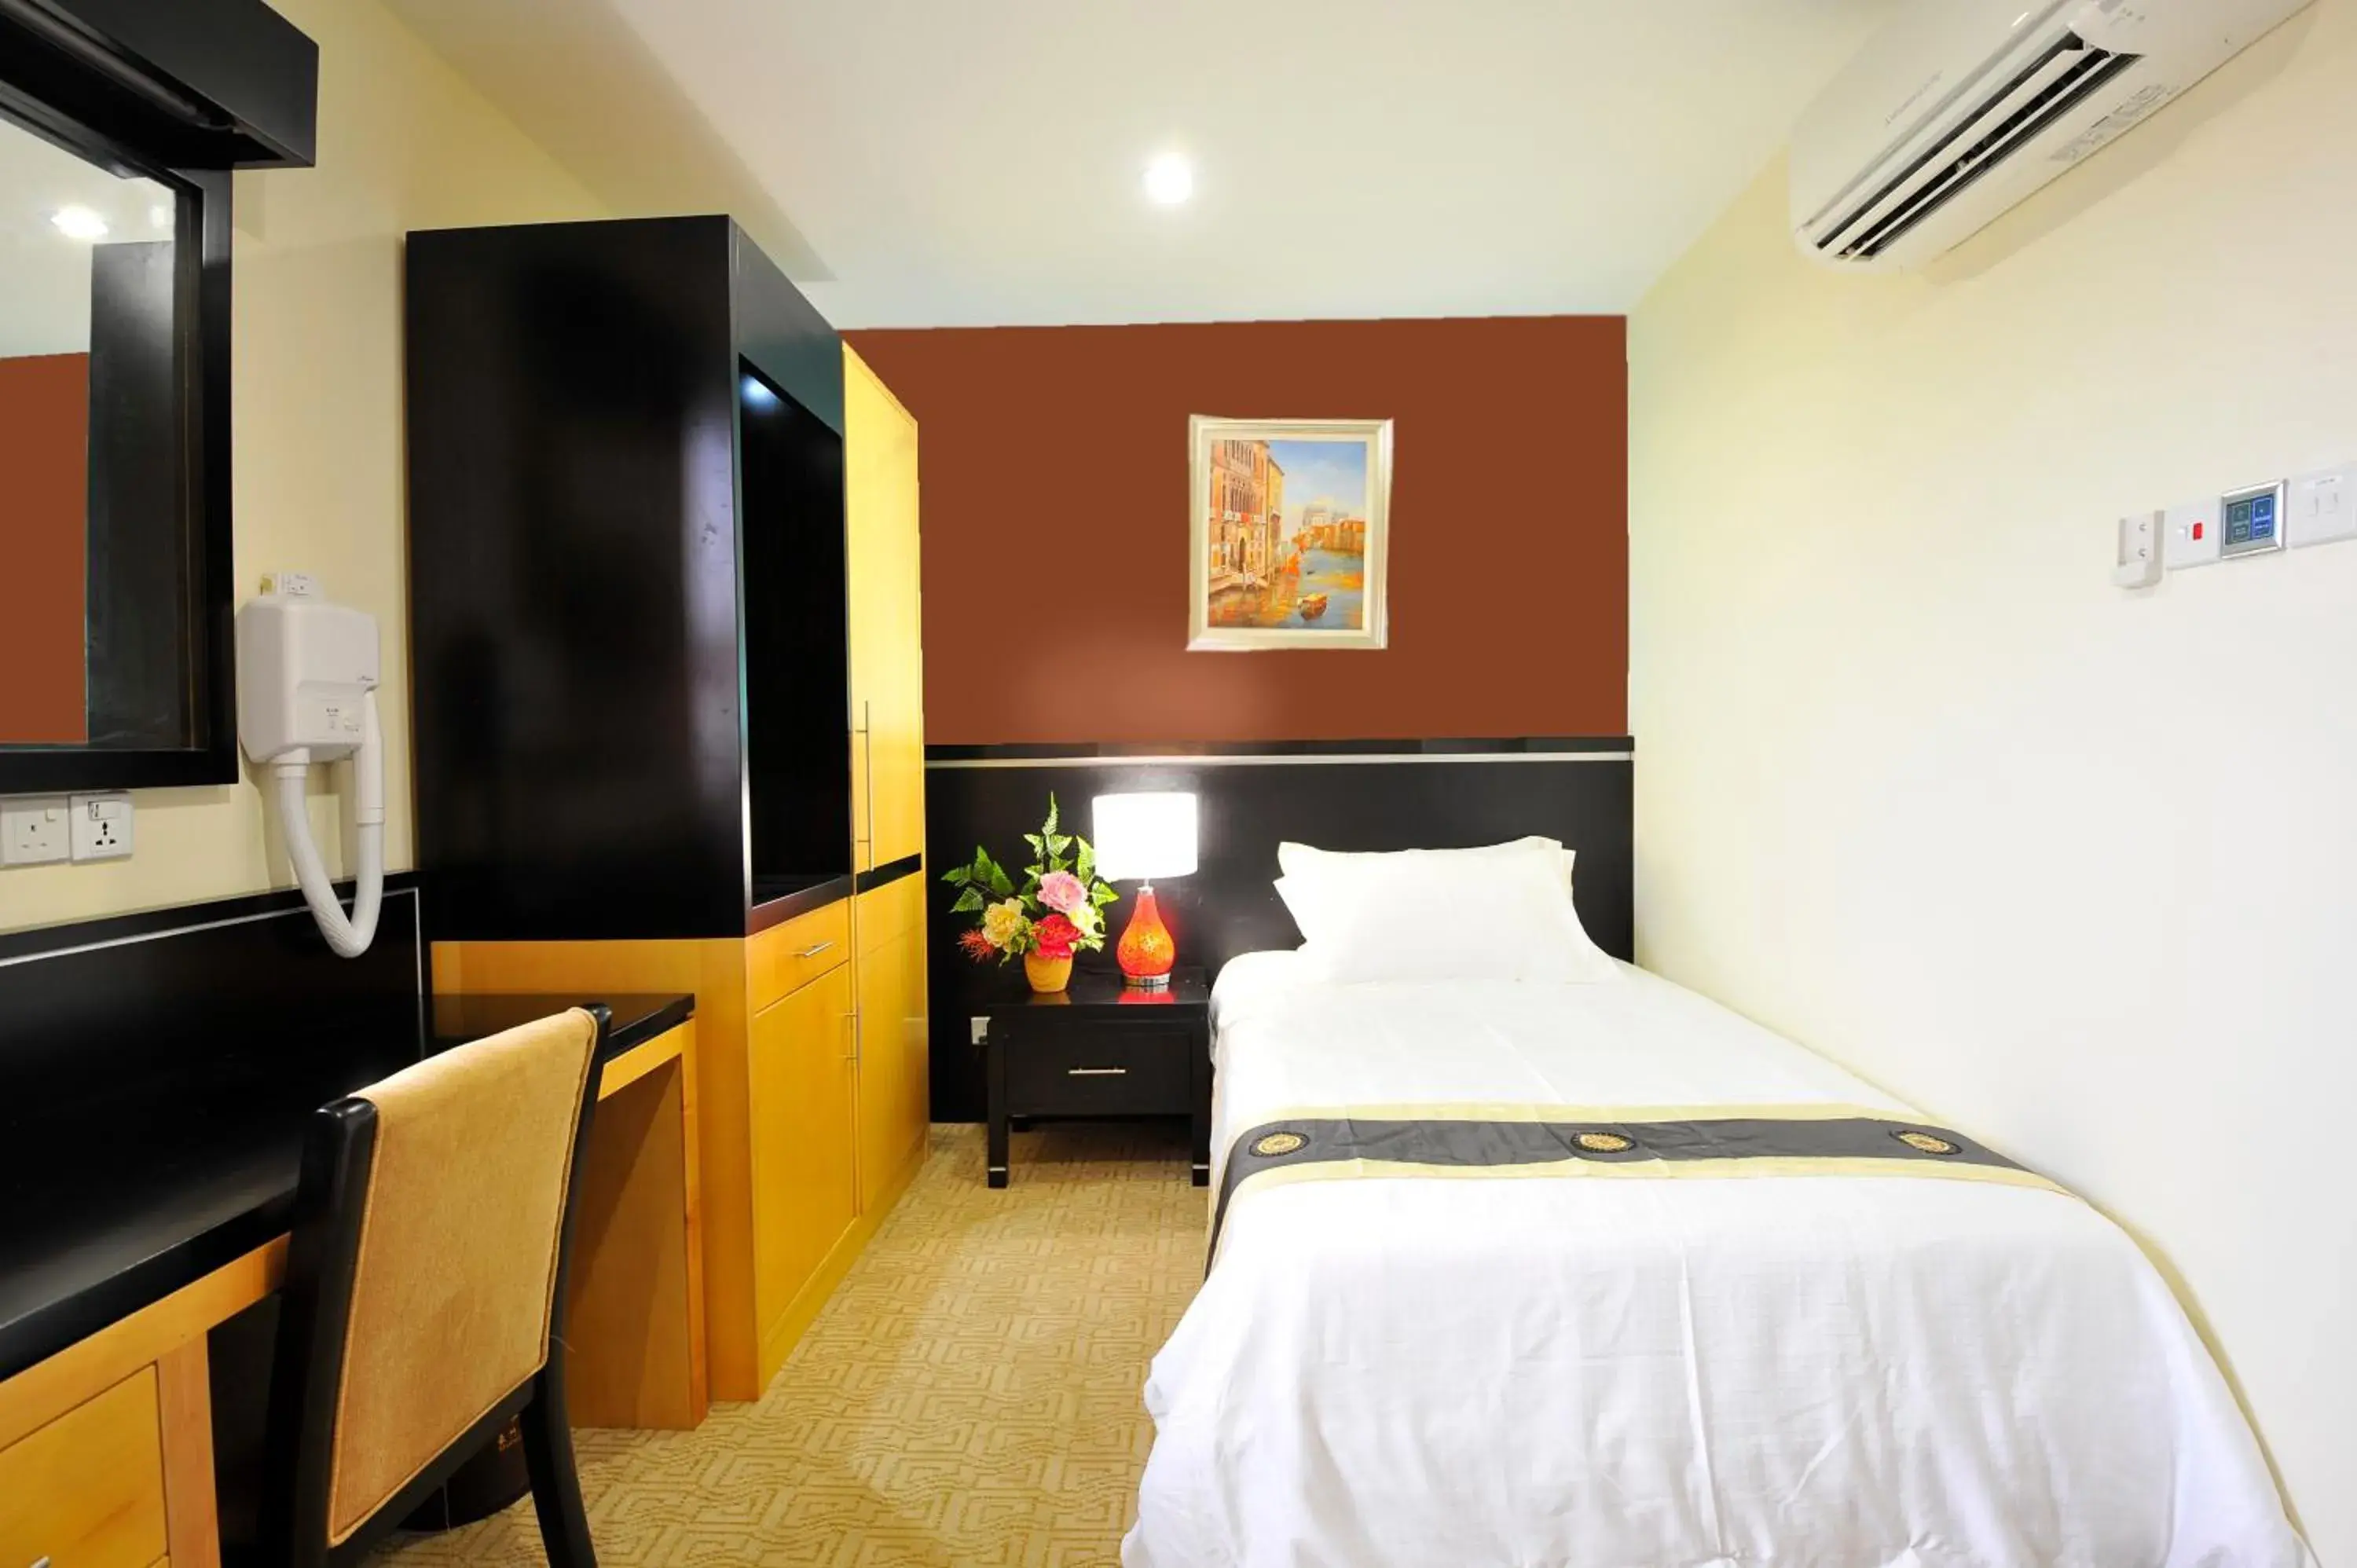 Deluxe Single Room in Hallmark Regency Hotel - Johor Bahru